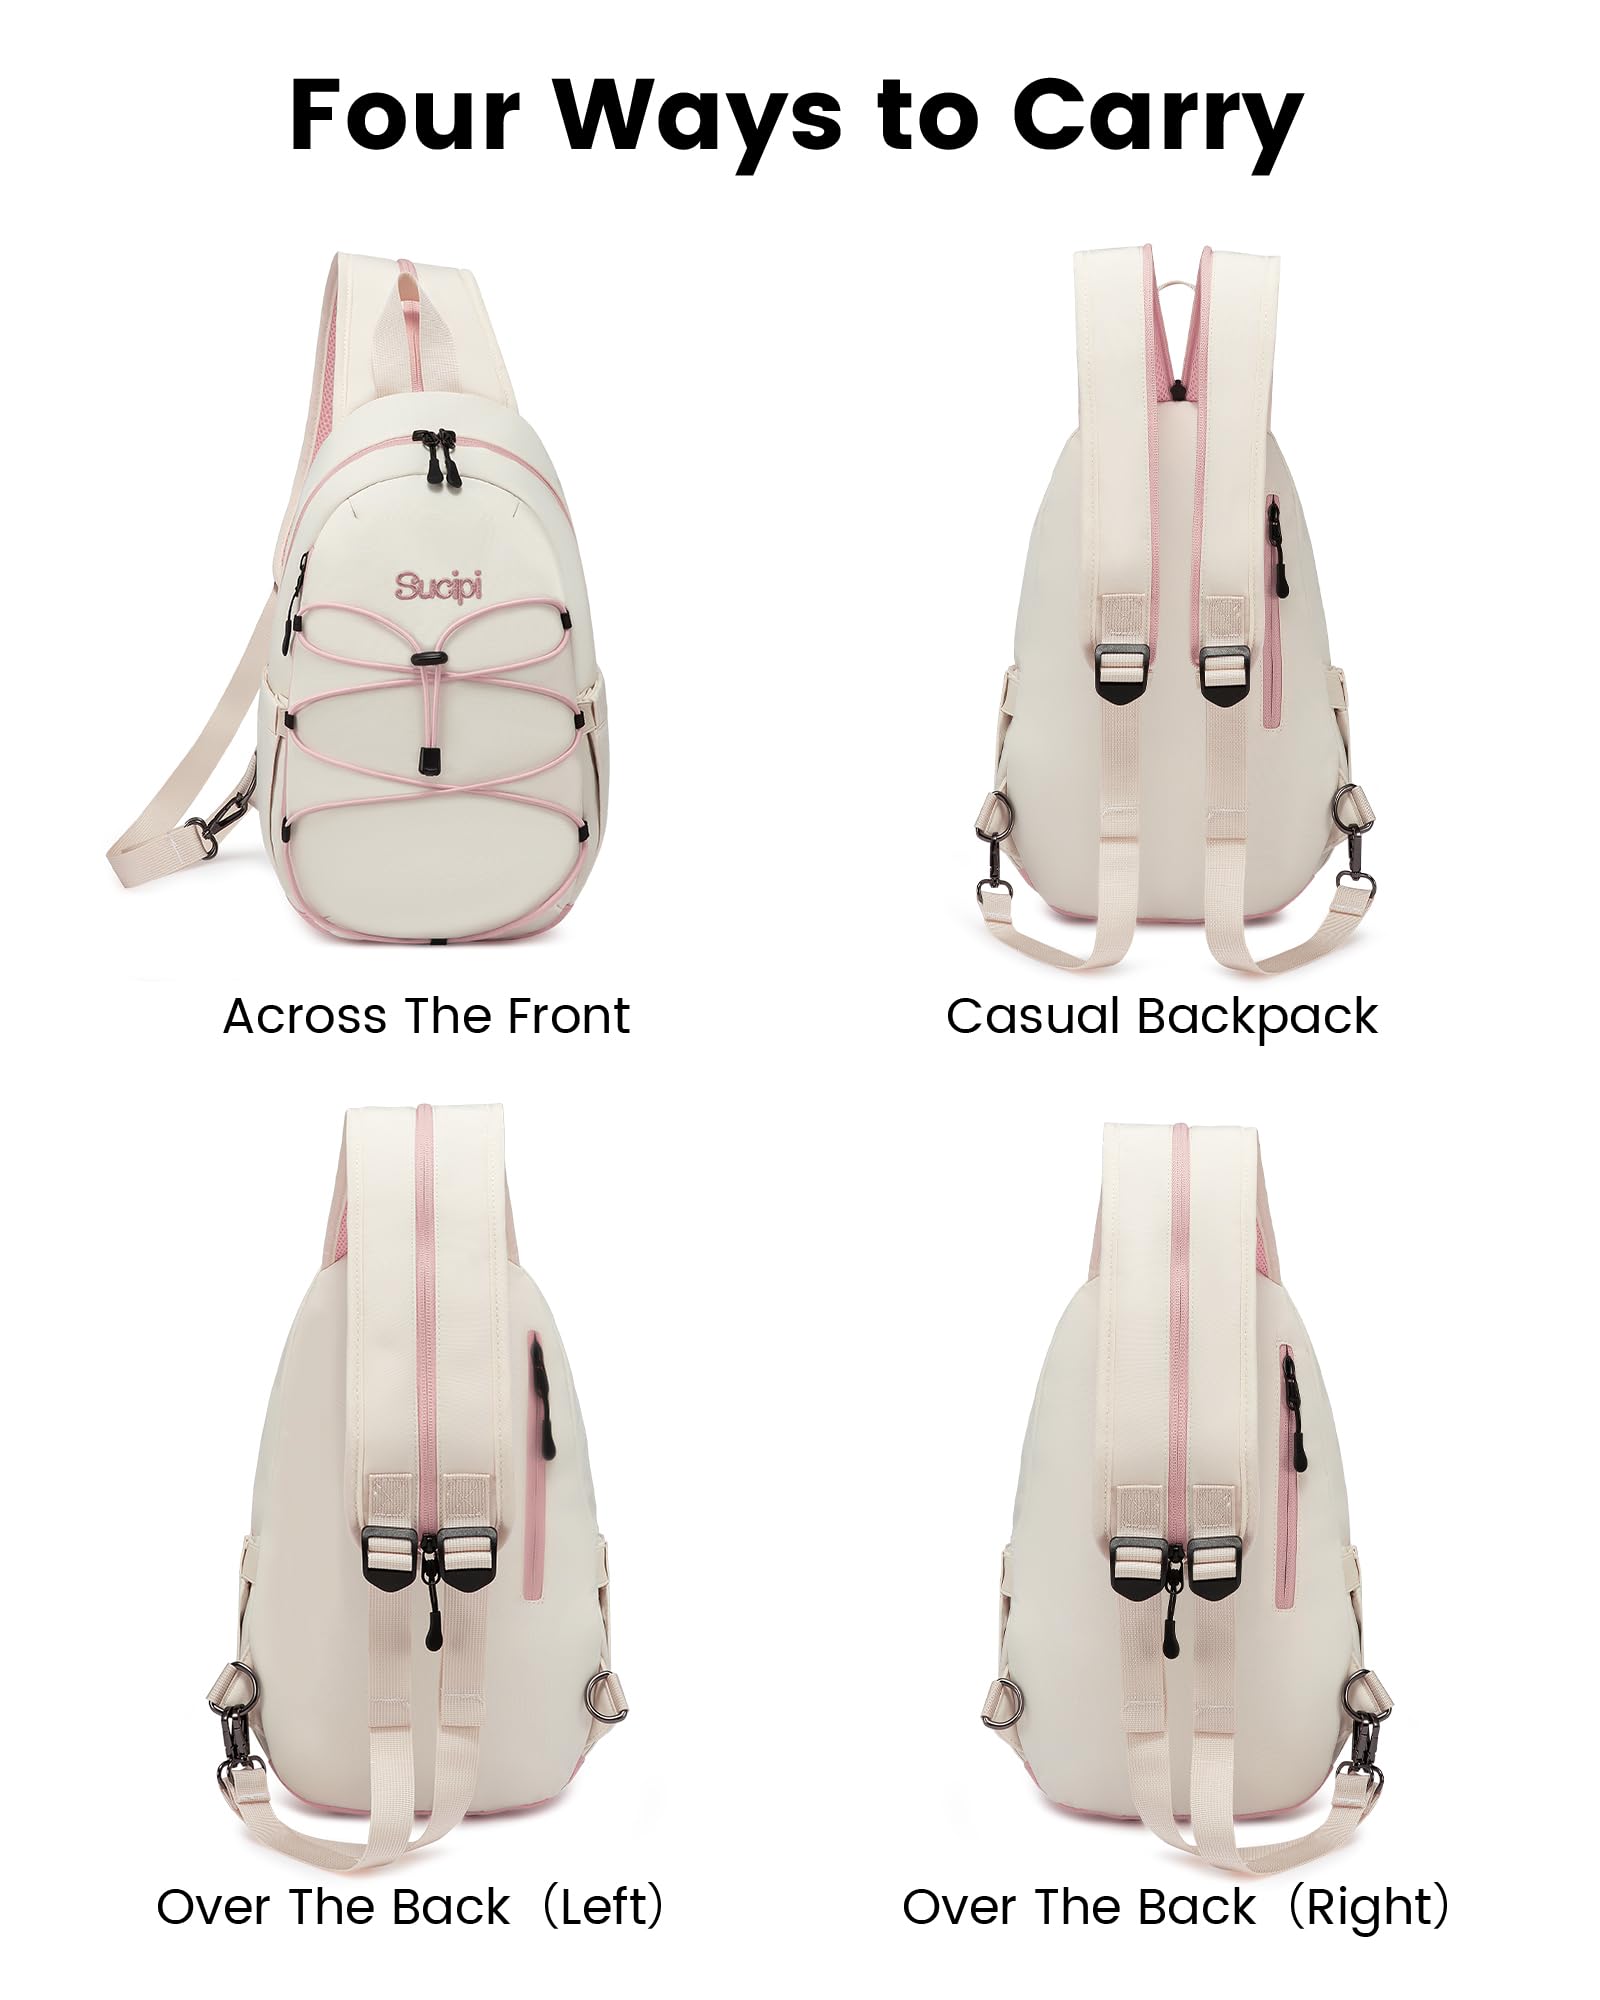 Sucipi Crossbody Sling Bag for Women Convertible Hiking Backpack Trendy Shoulder Bag Chest Bag Lightweight Belt Bag Mini Backpack for Travel Sport